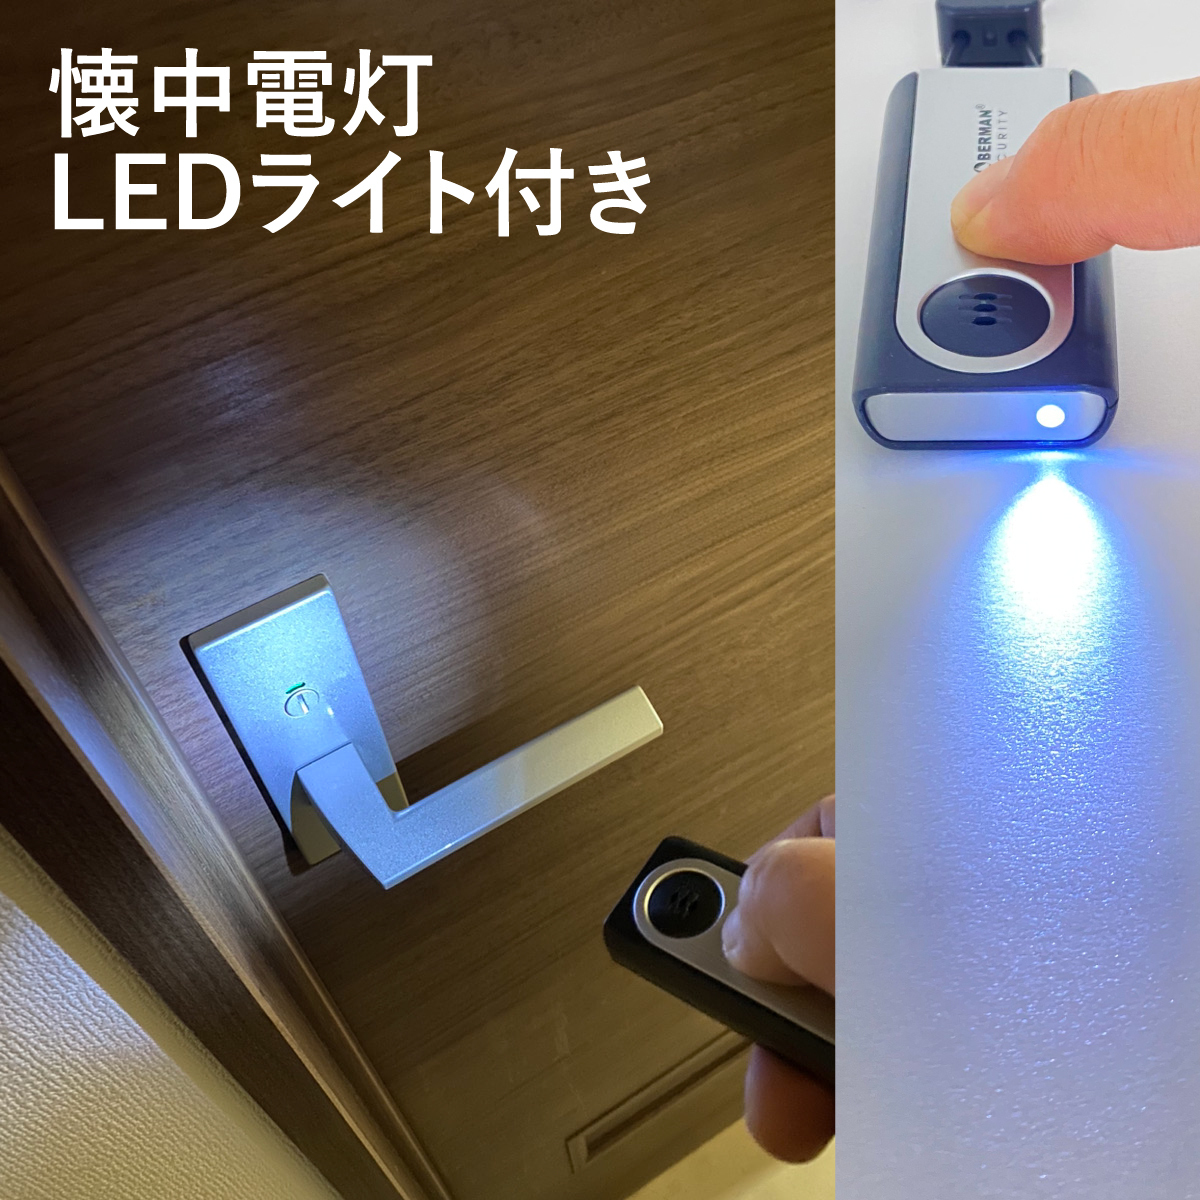  postage 198! crime prevention door alarm blue LED light attaching large volume alarm 